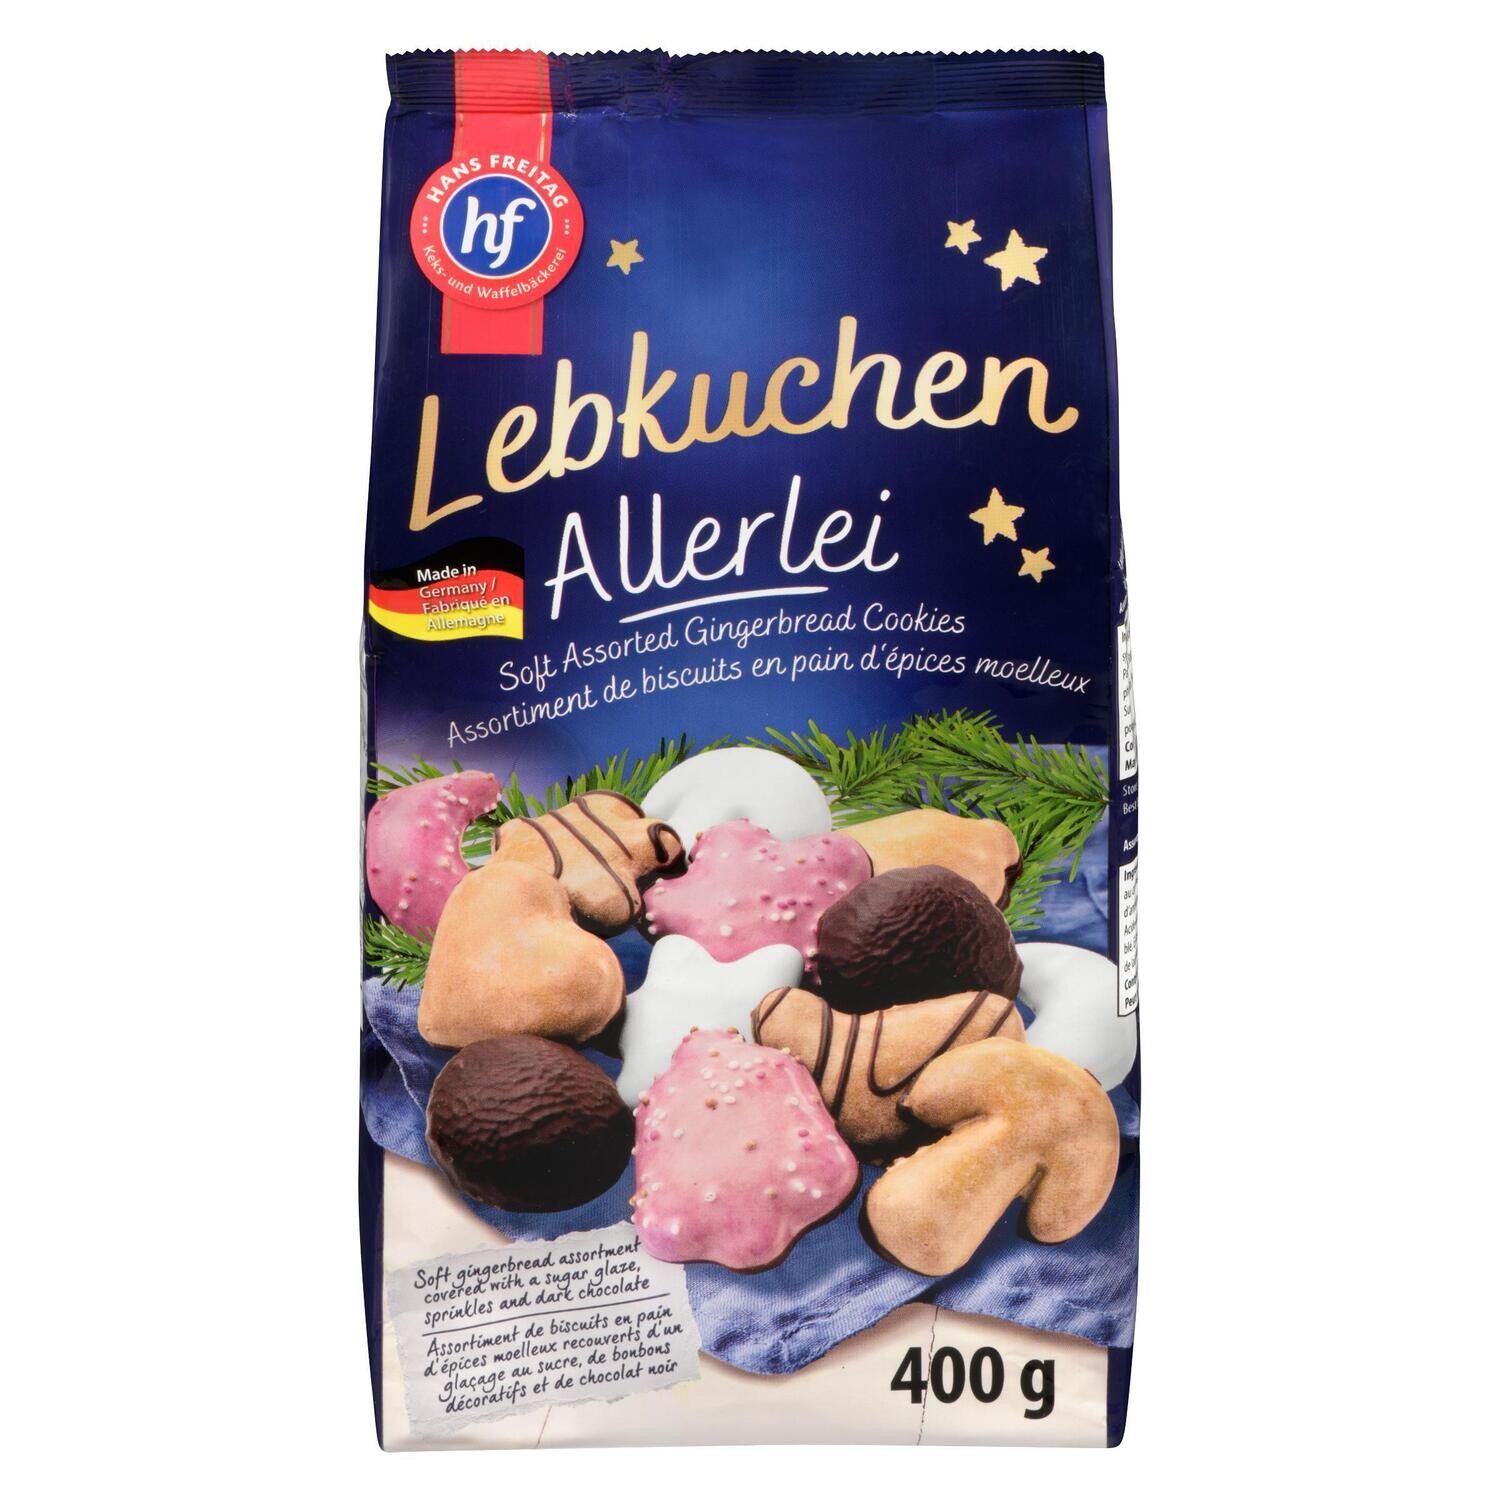 Hans Freitag Lebkuchen Allerlei Soft Assorted Gingerbread Cookies 10.6 oz (300g)